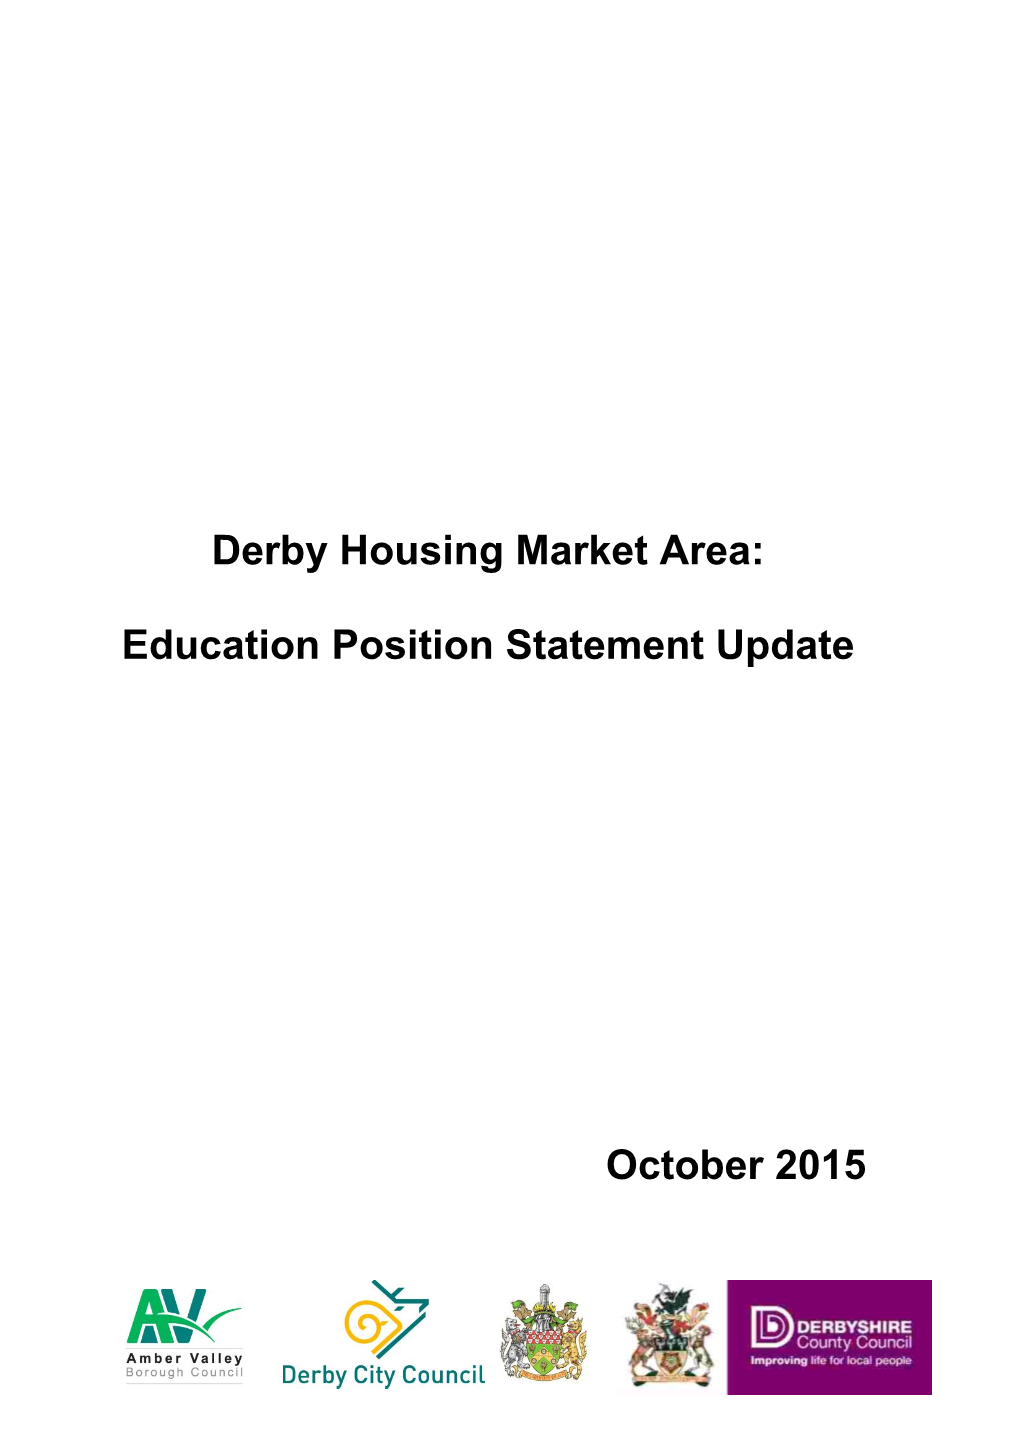 Derby Housing Market Area: Education Position Statement